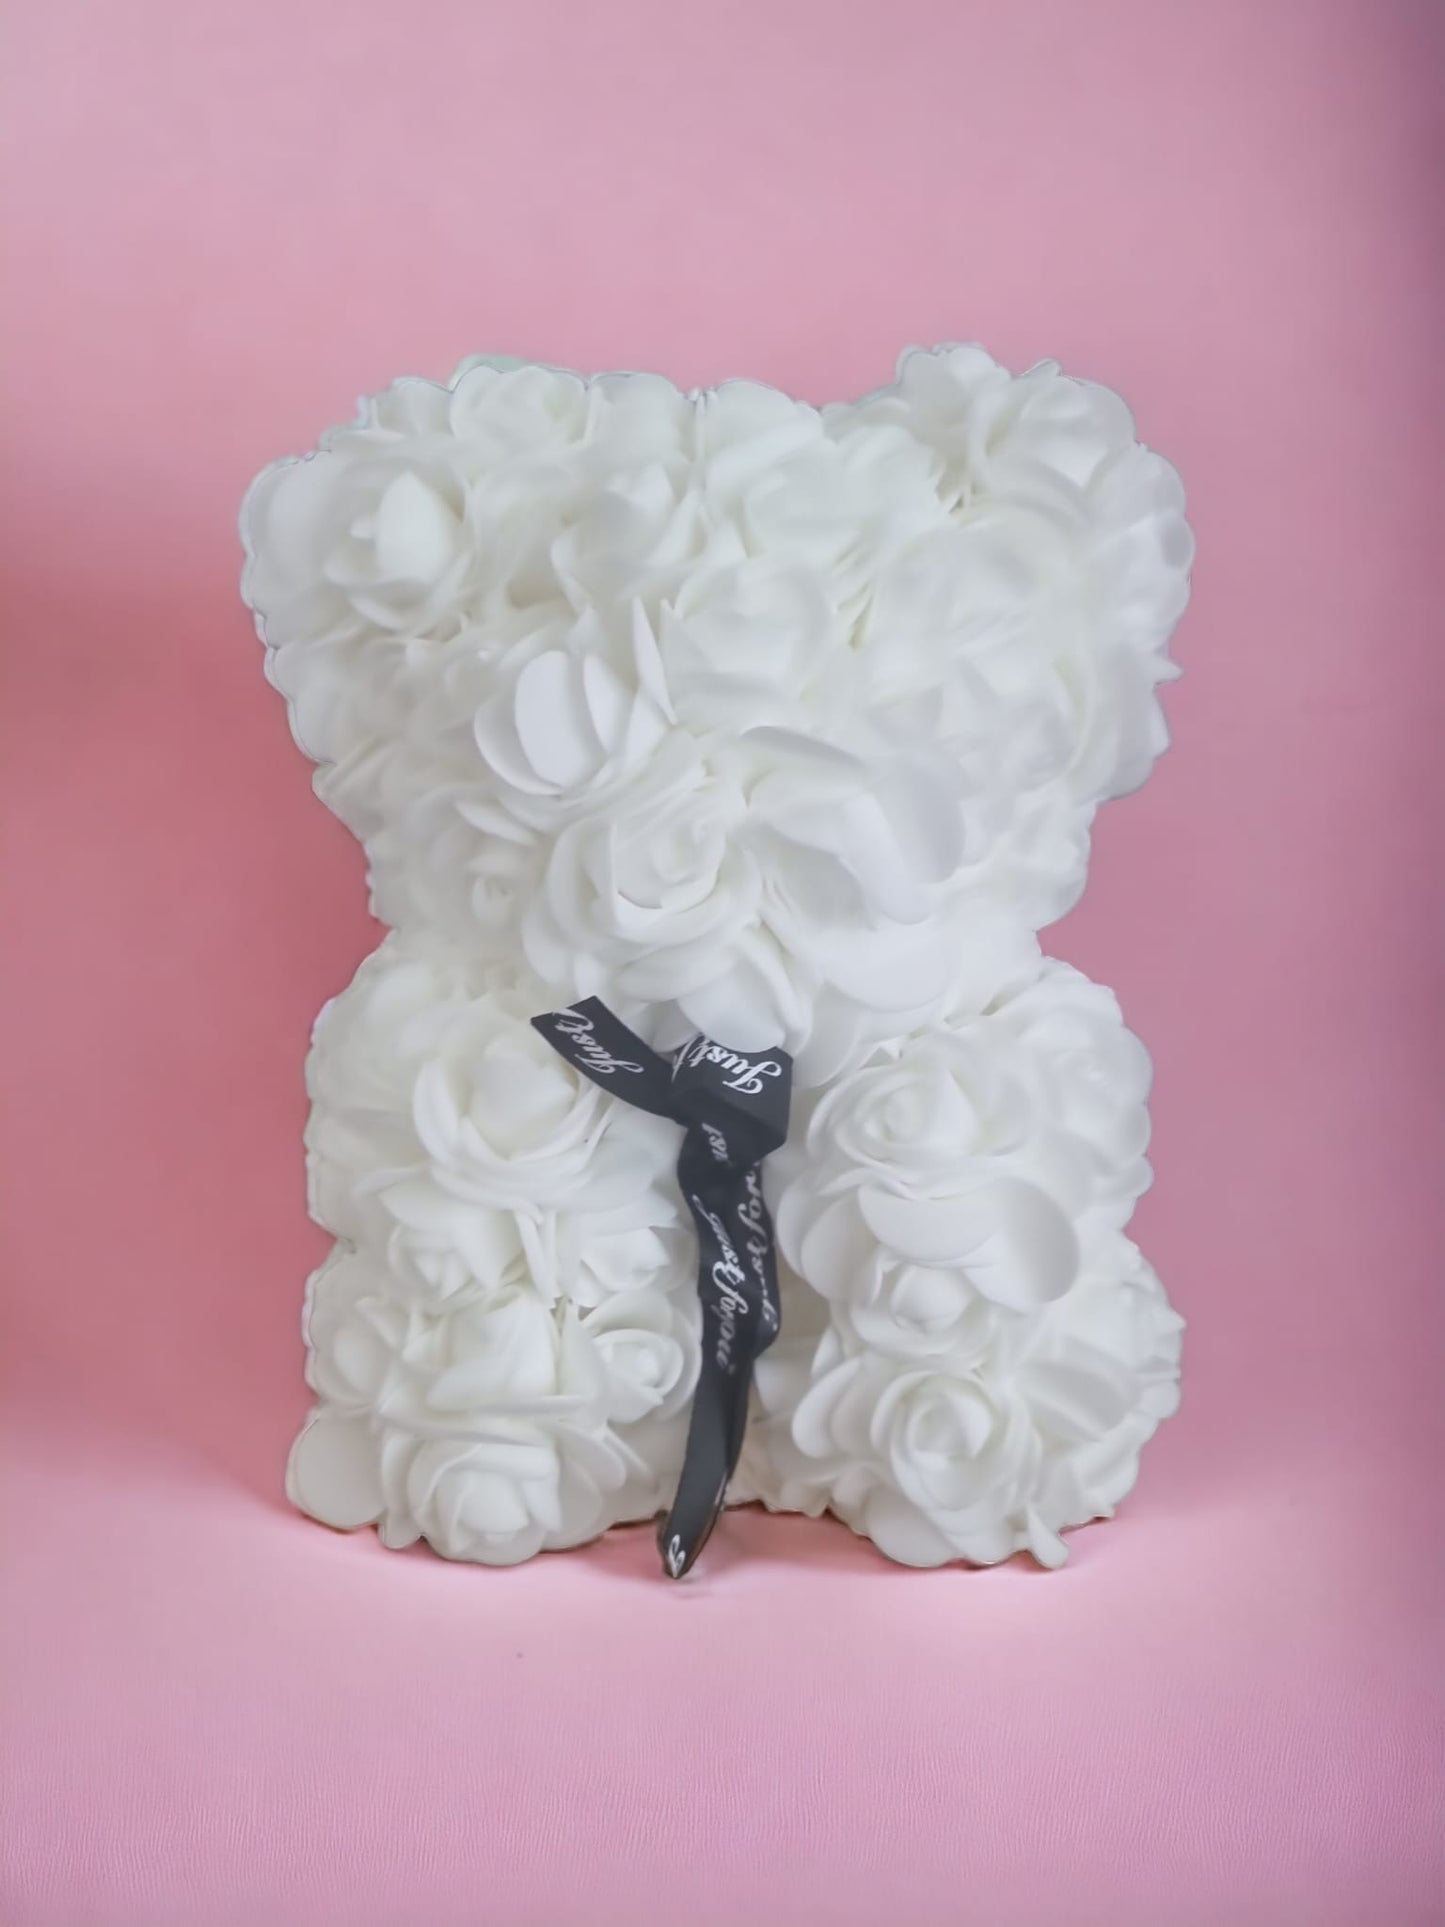 Eternal Love White Rose Bear - Gift for Valentines Day - Auras Workshop  -   -   - Cyprus & Greece - Wholesale - Retail #